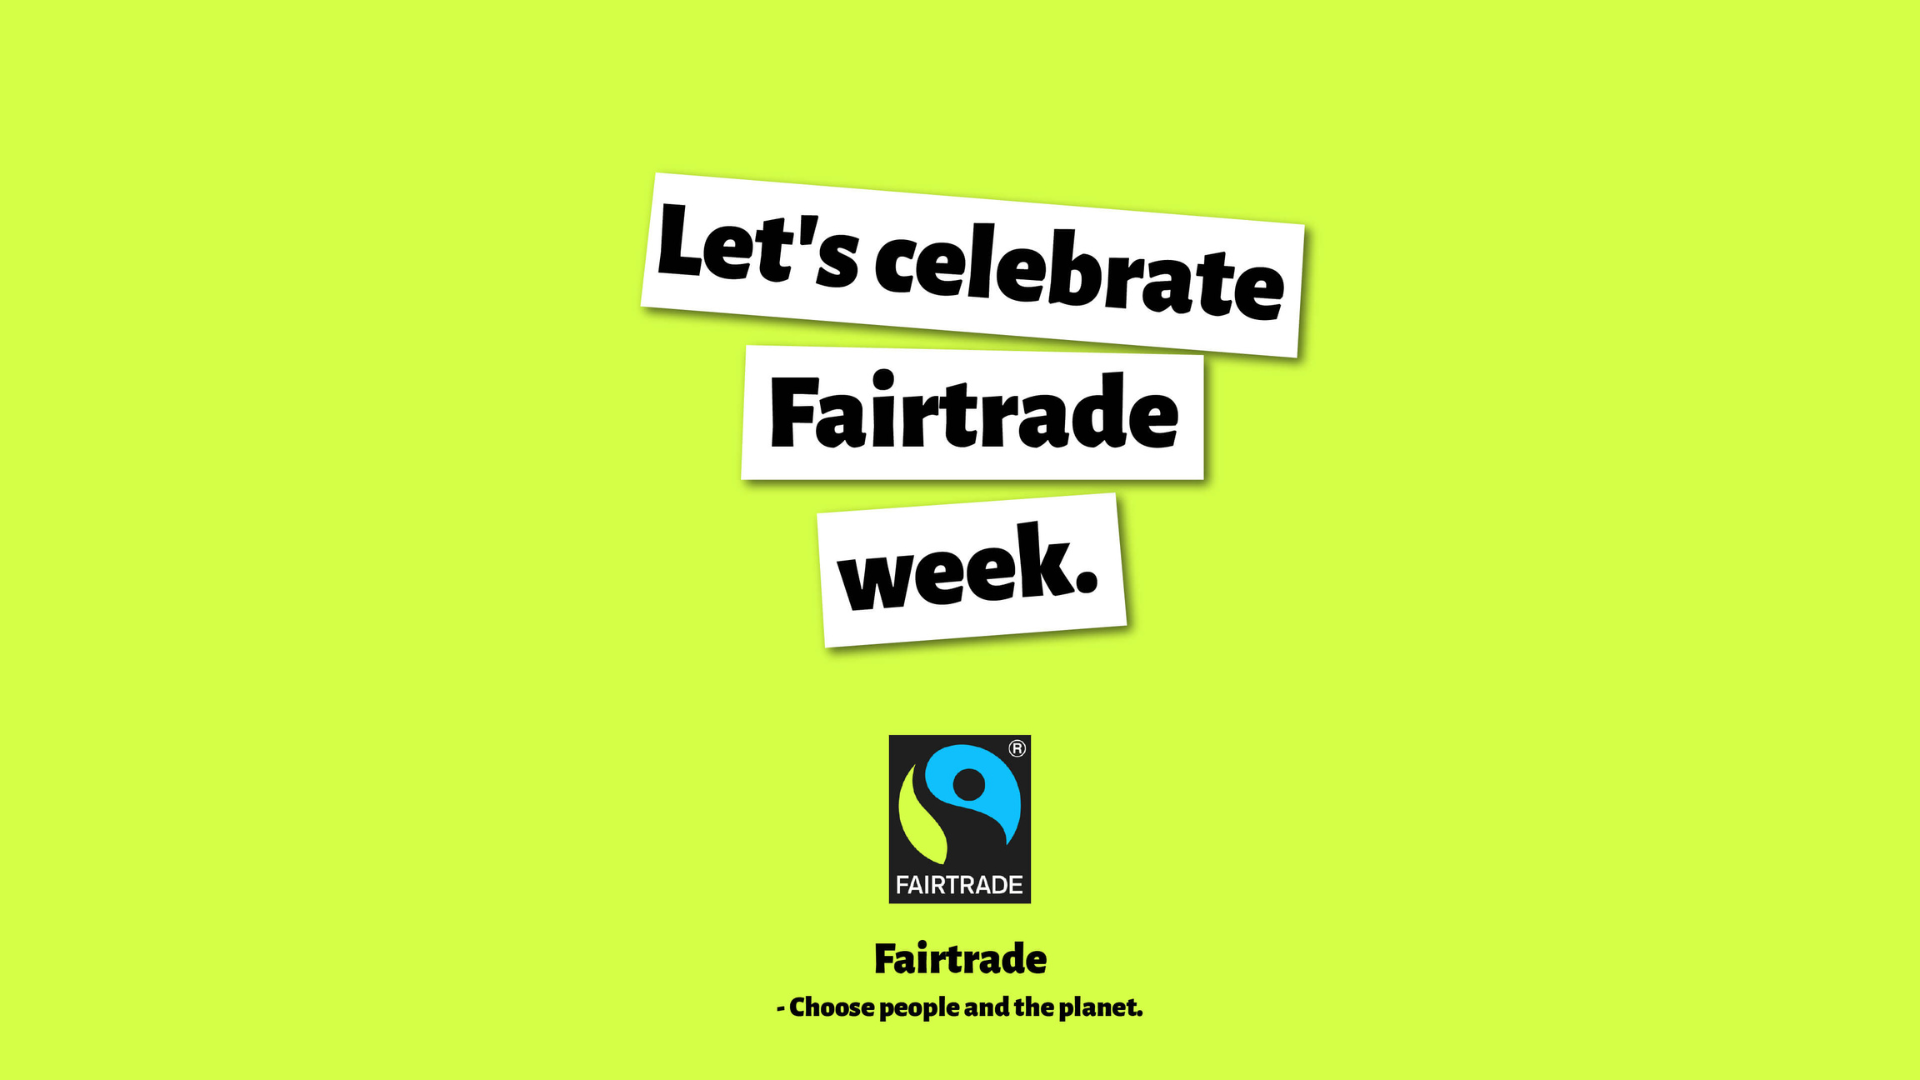 Tamko is taking part in Fairtrade week!